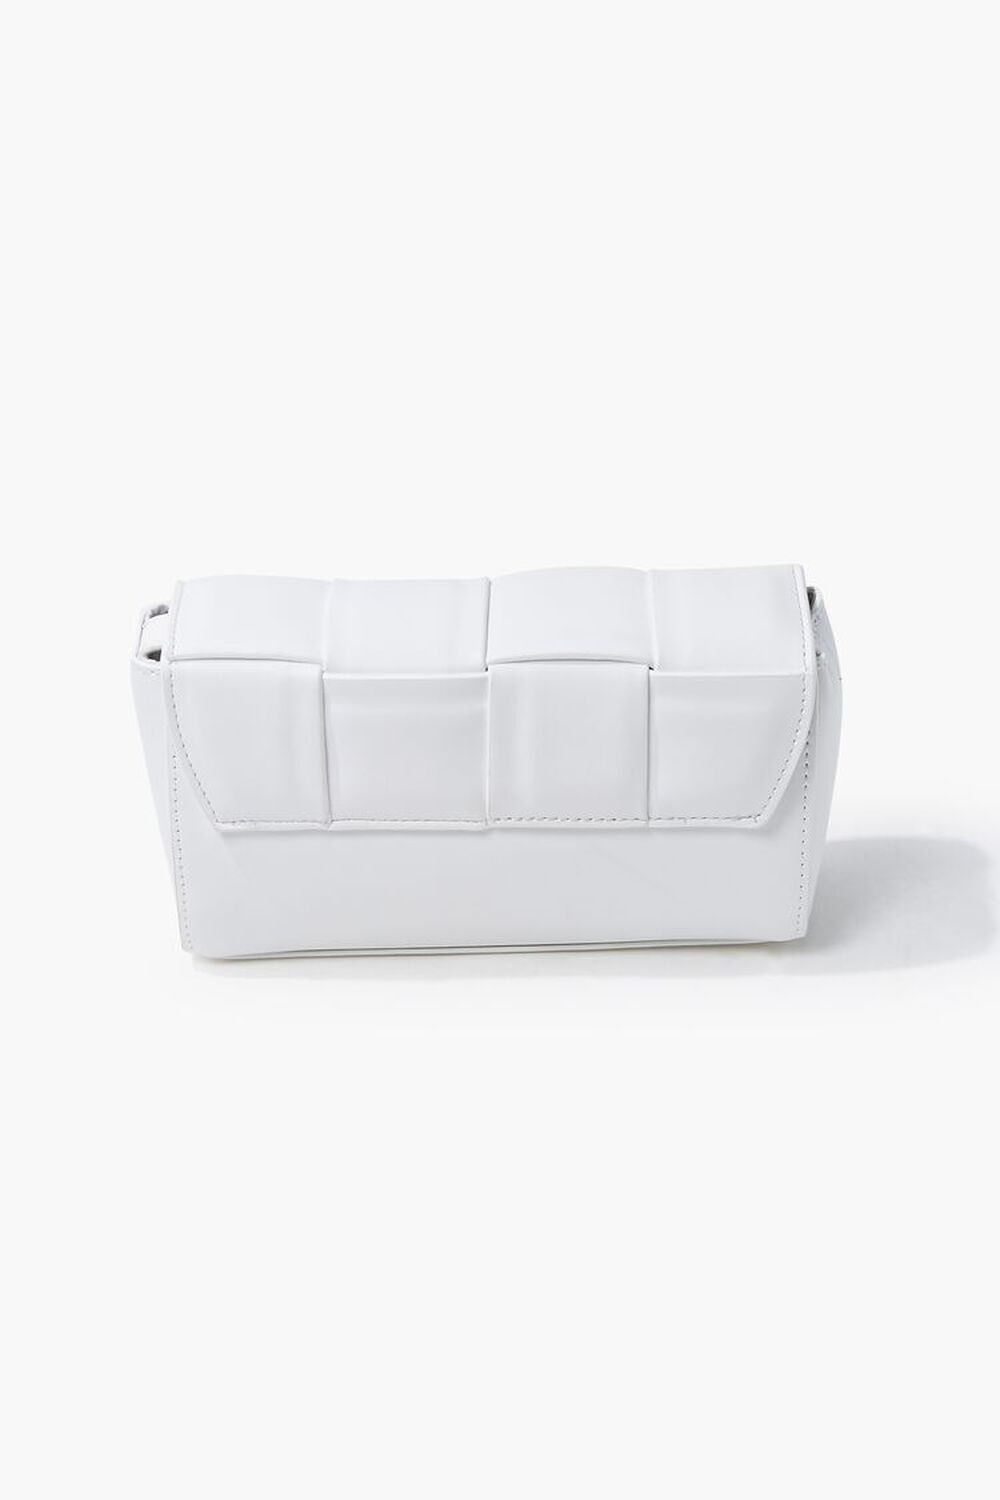 WHITE Faux Leather Crosshatch Crossbody Bag, image 1